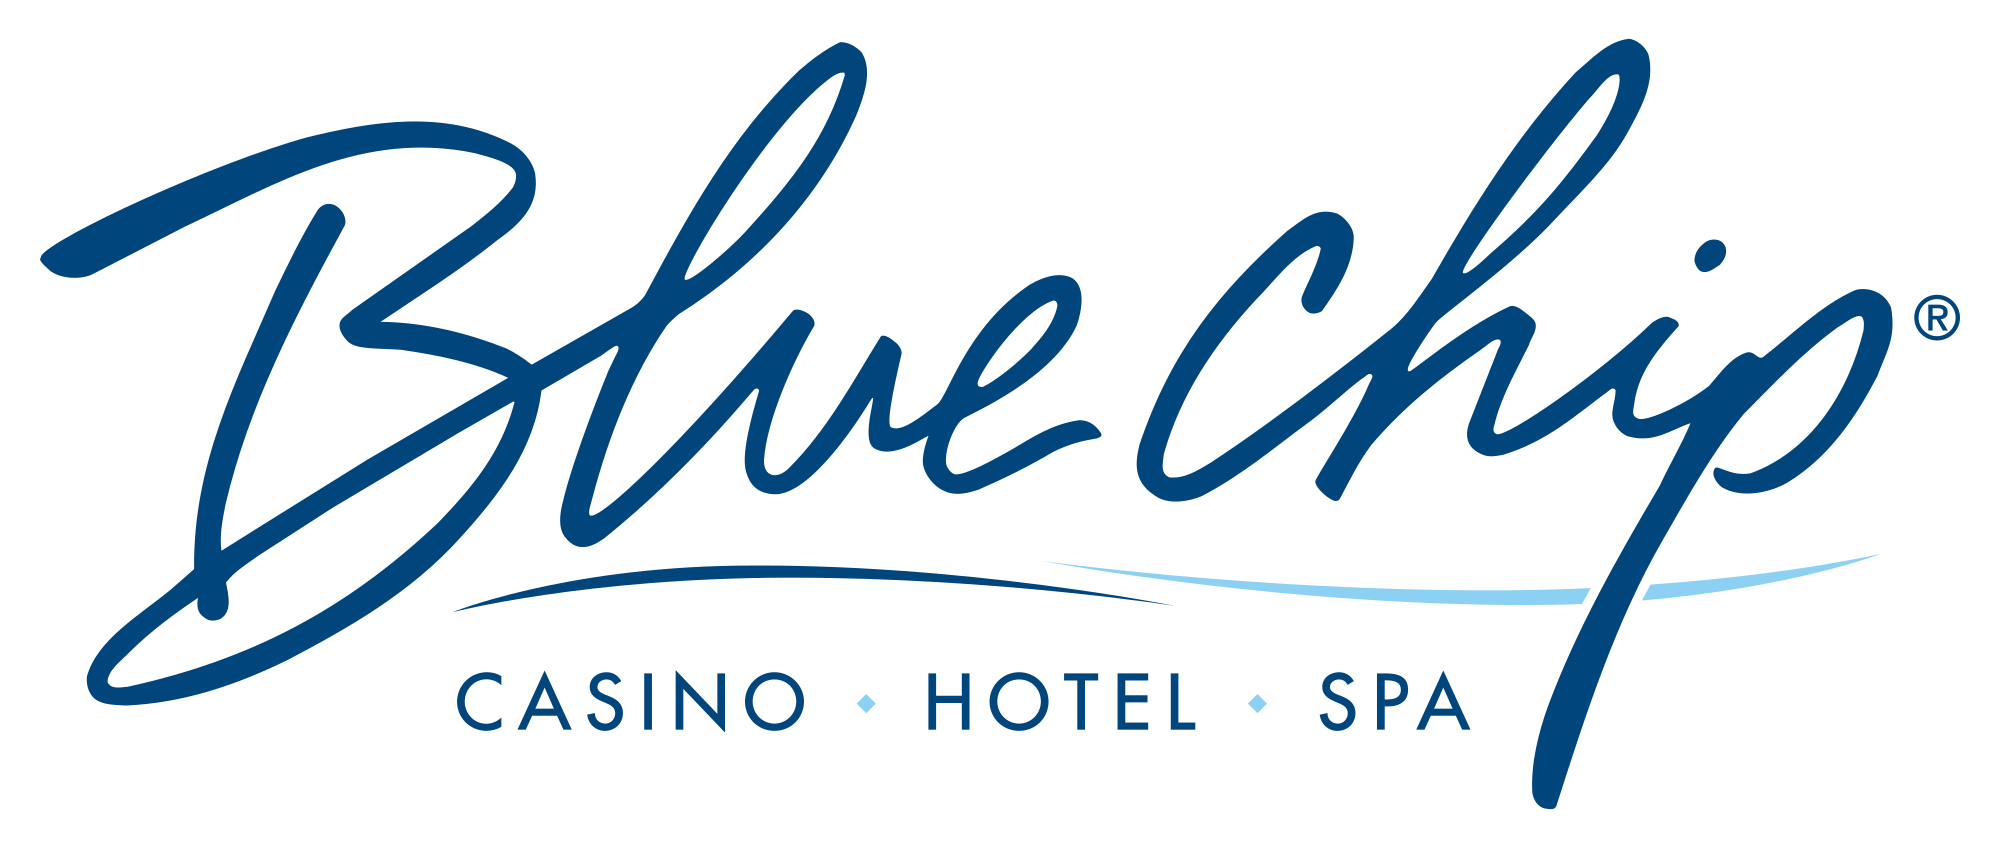 Blue Chip Casino–Michigan City, IN